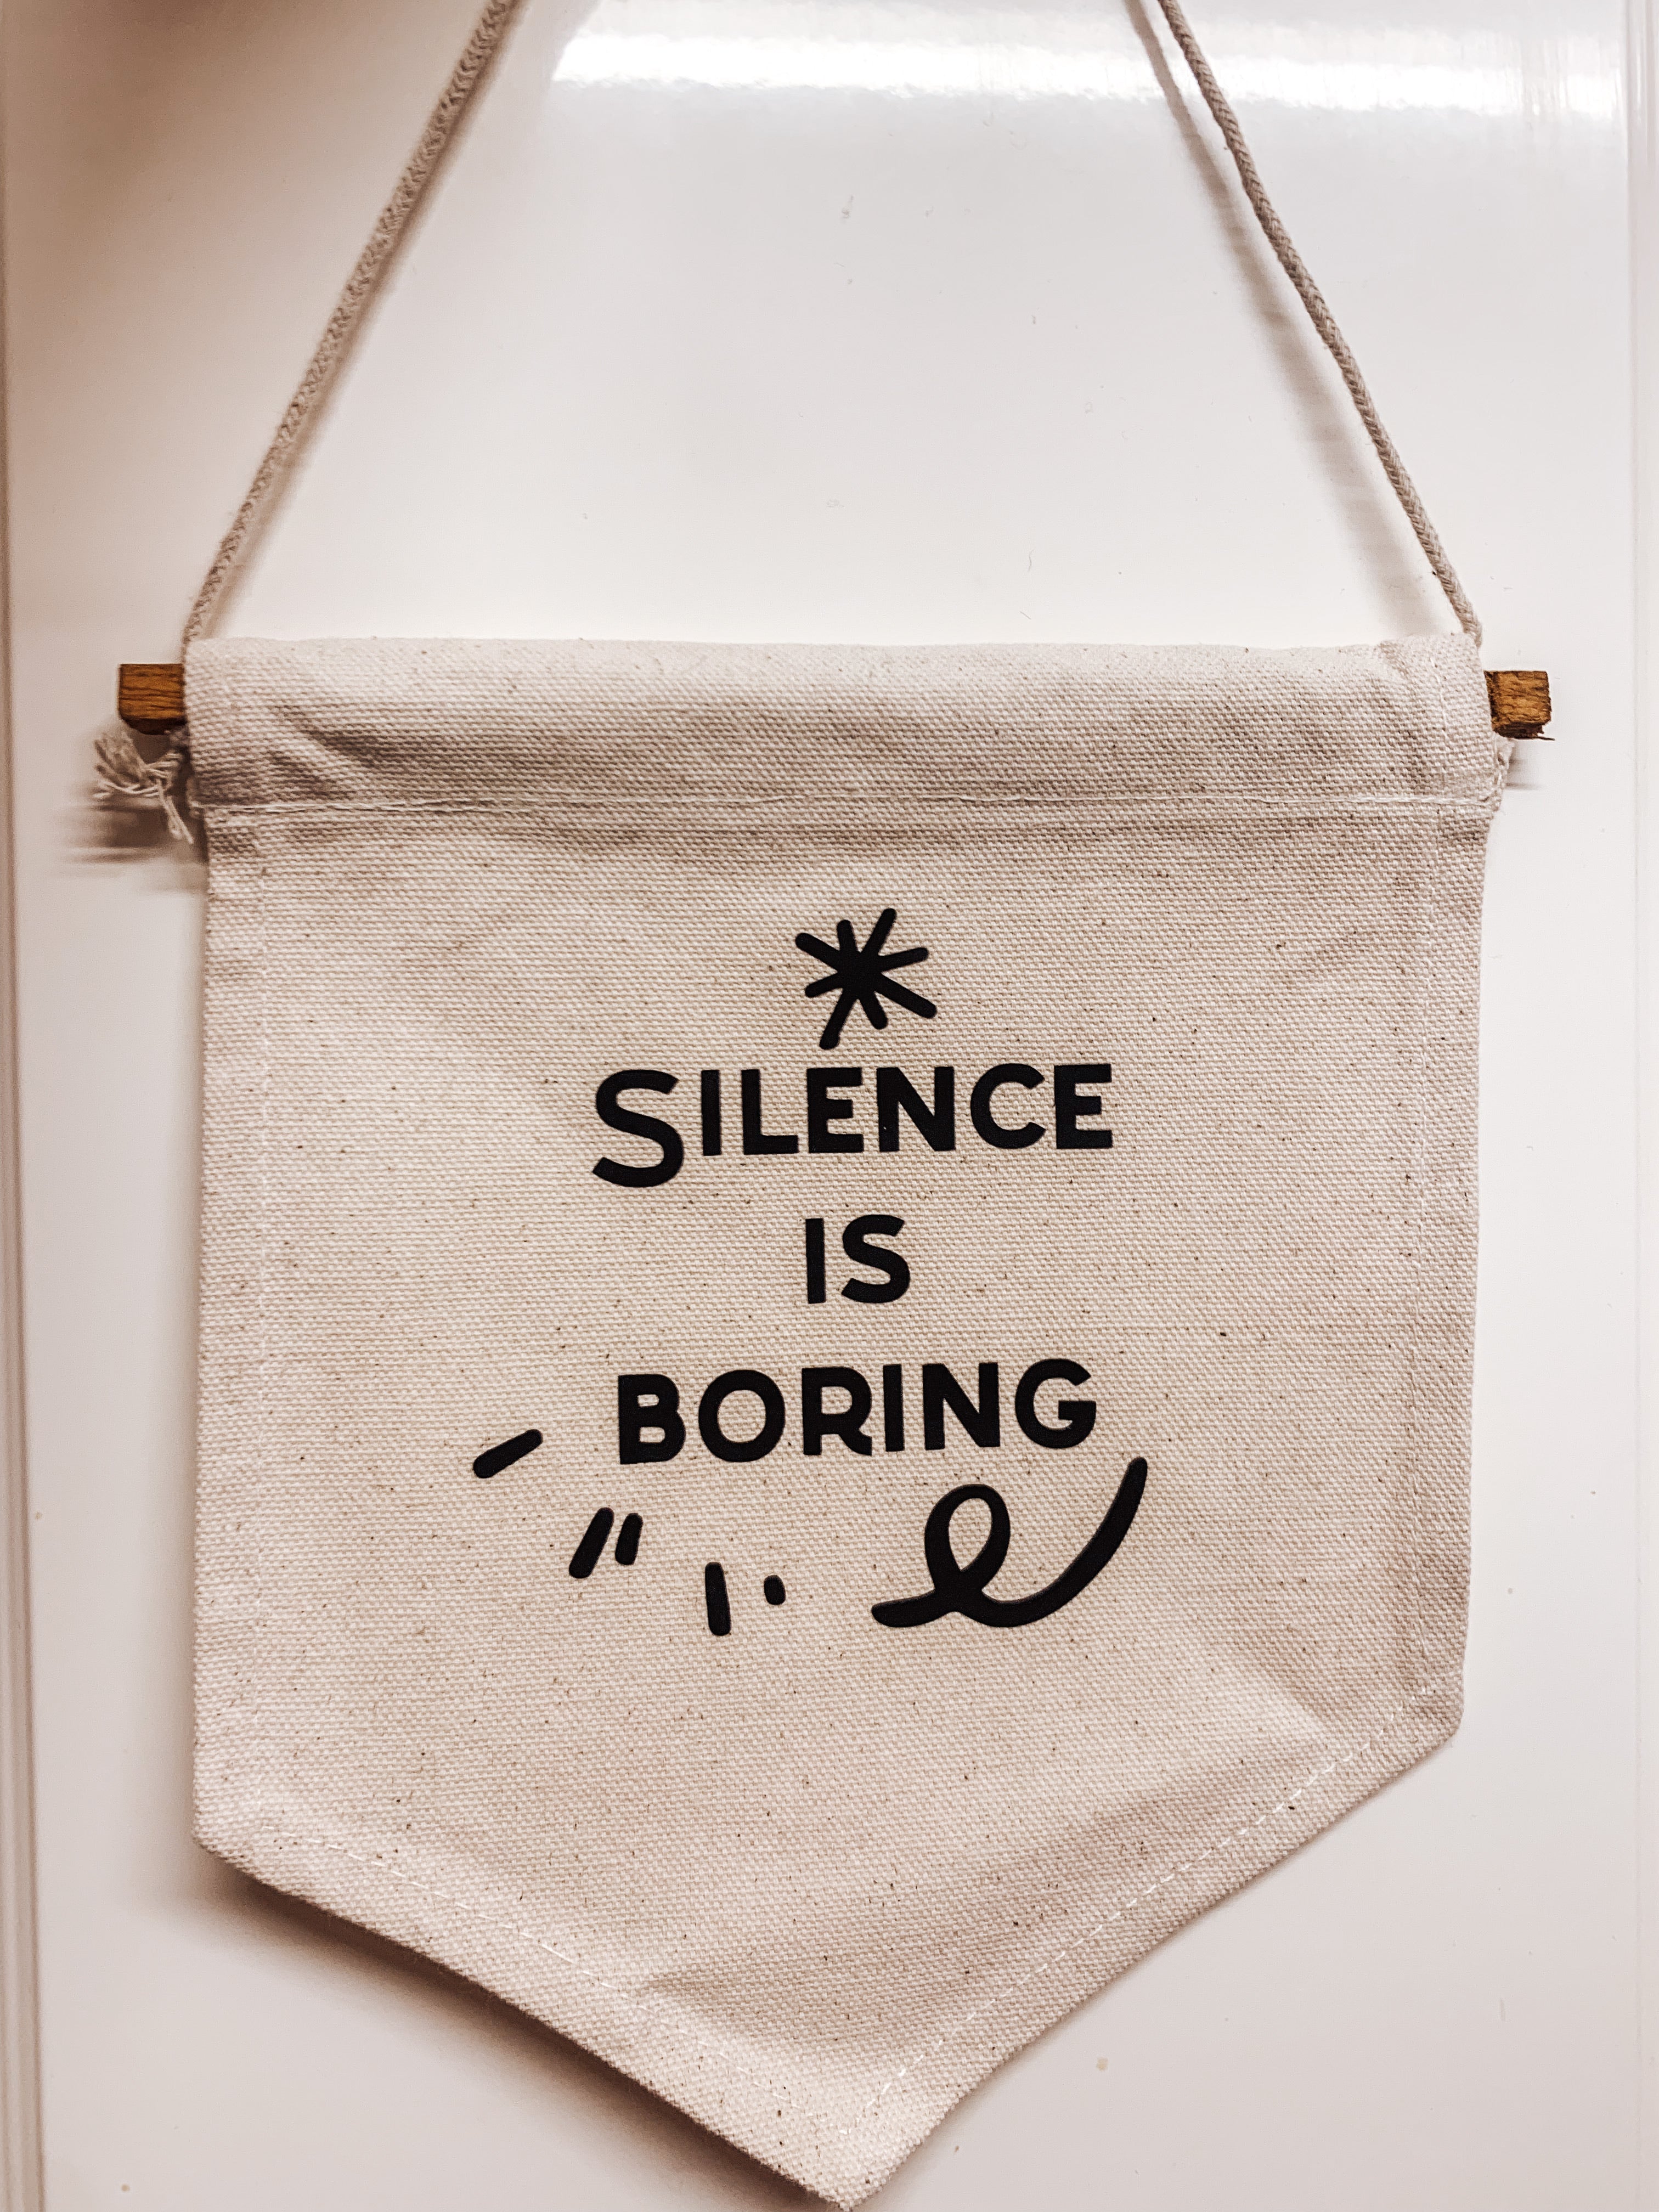 Silence is boring canvas flag /banner /pendant